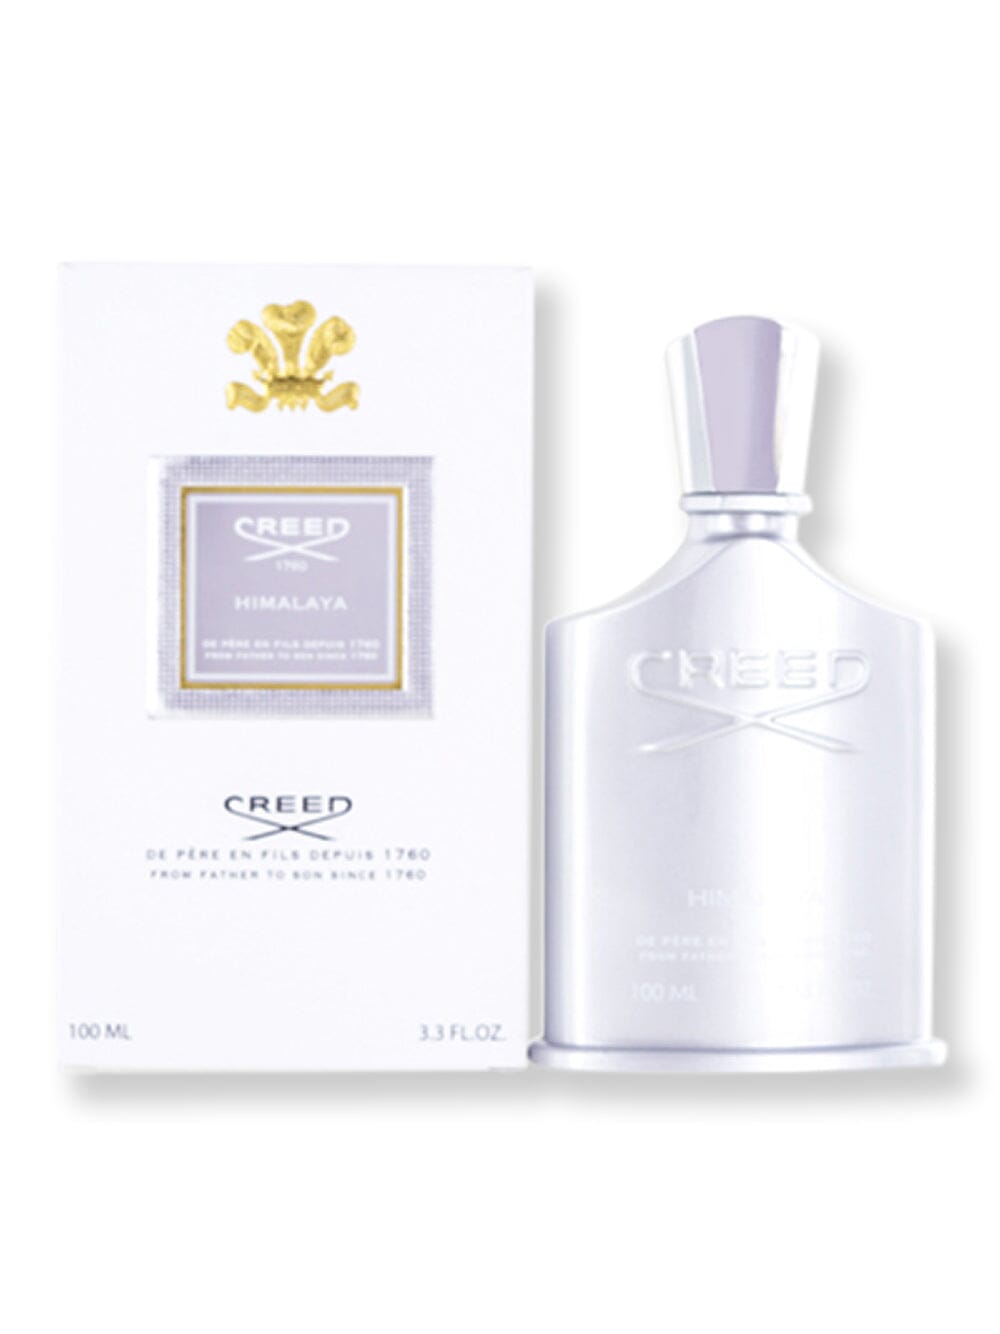 Creed Creed Himalaya EDP Spray 3.3 oz100 ml Perfume 